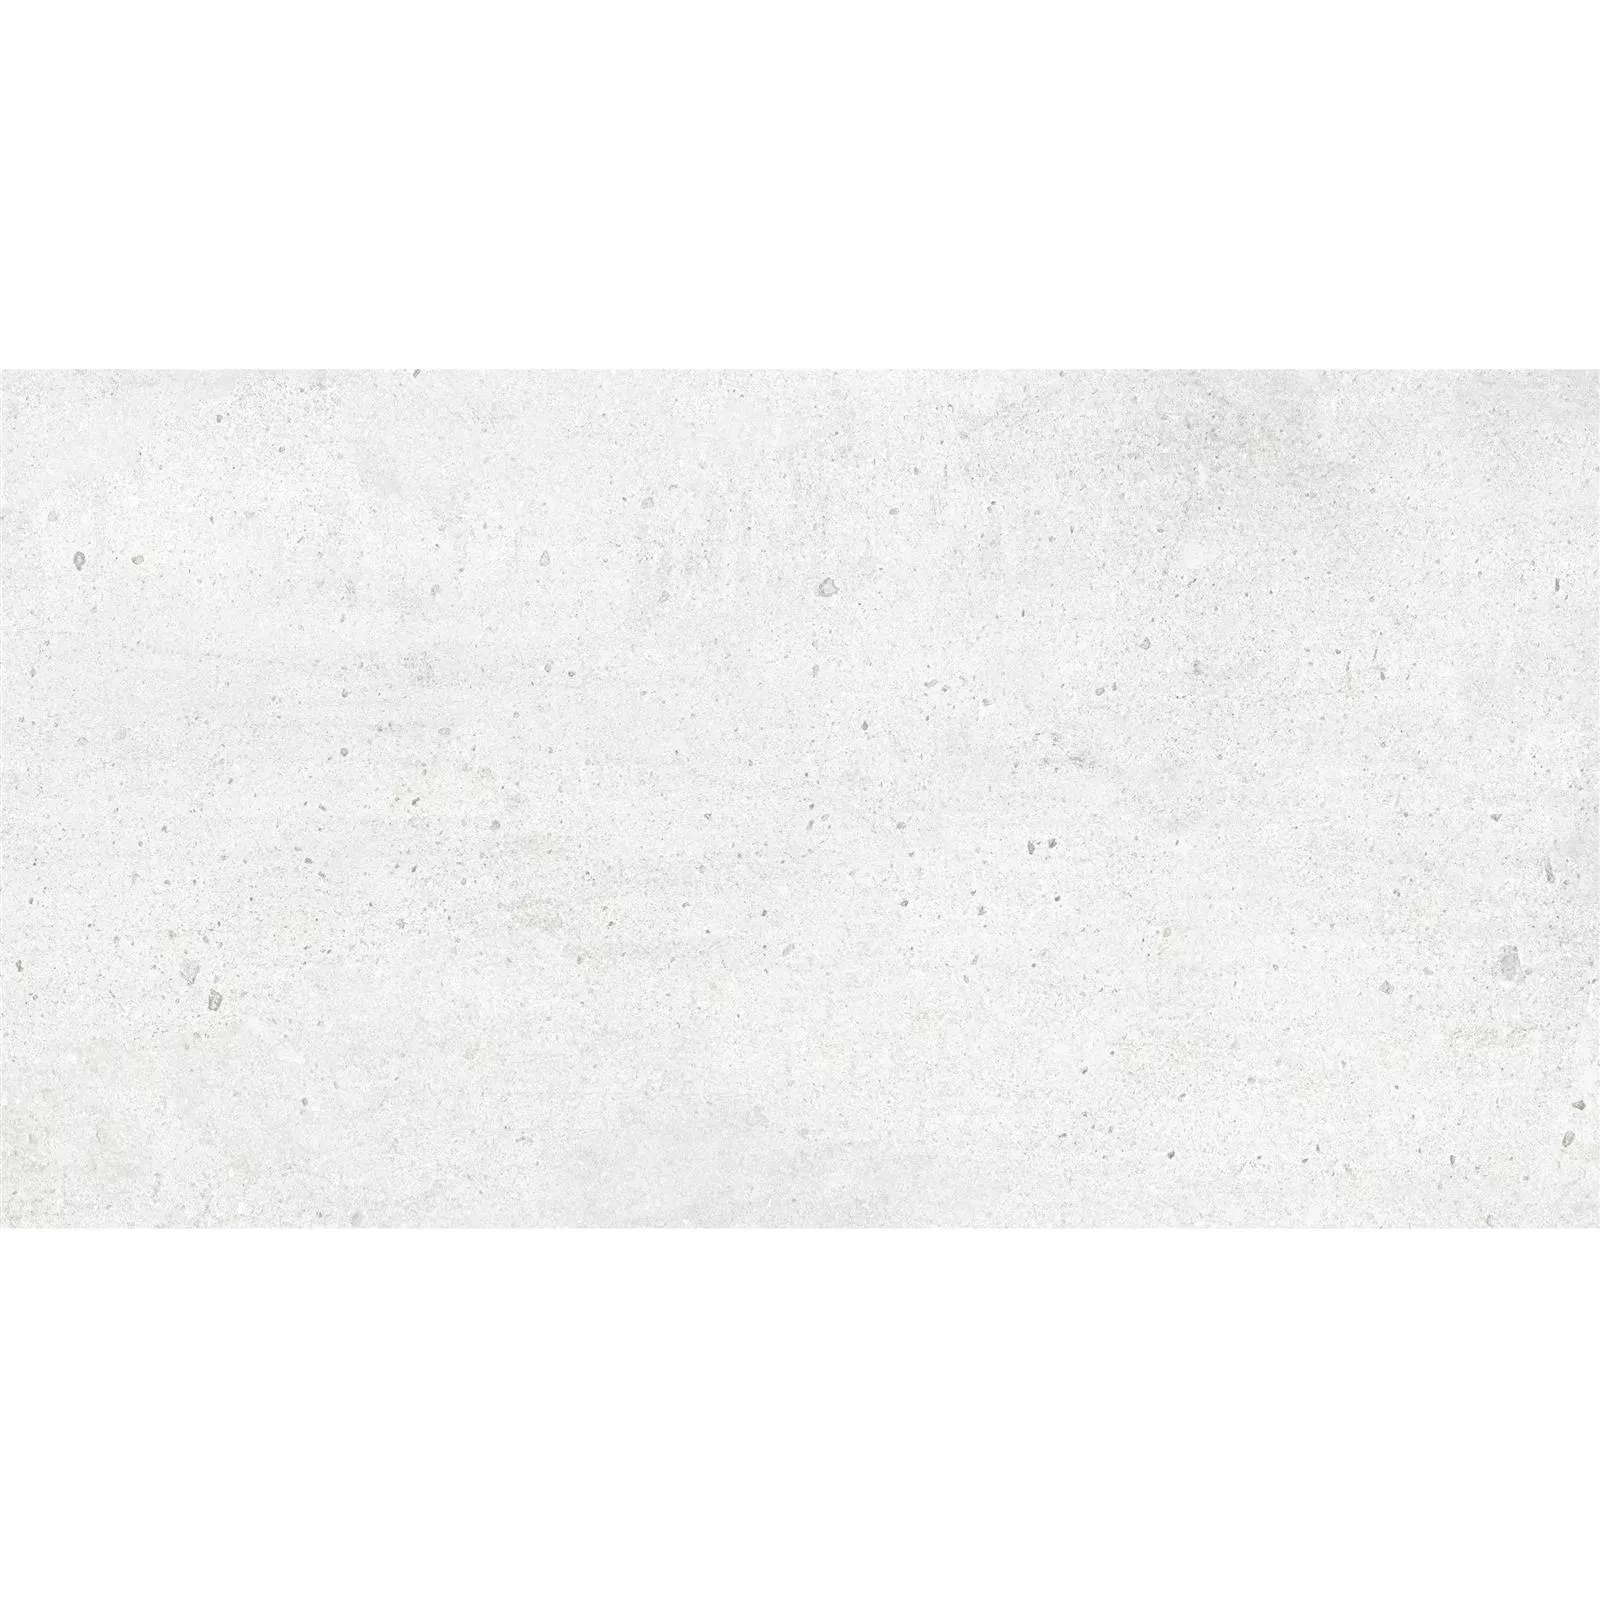 Ladrilhos Freeland Olhar de Pedra R10/B Branco 30x60cm